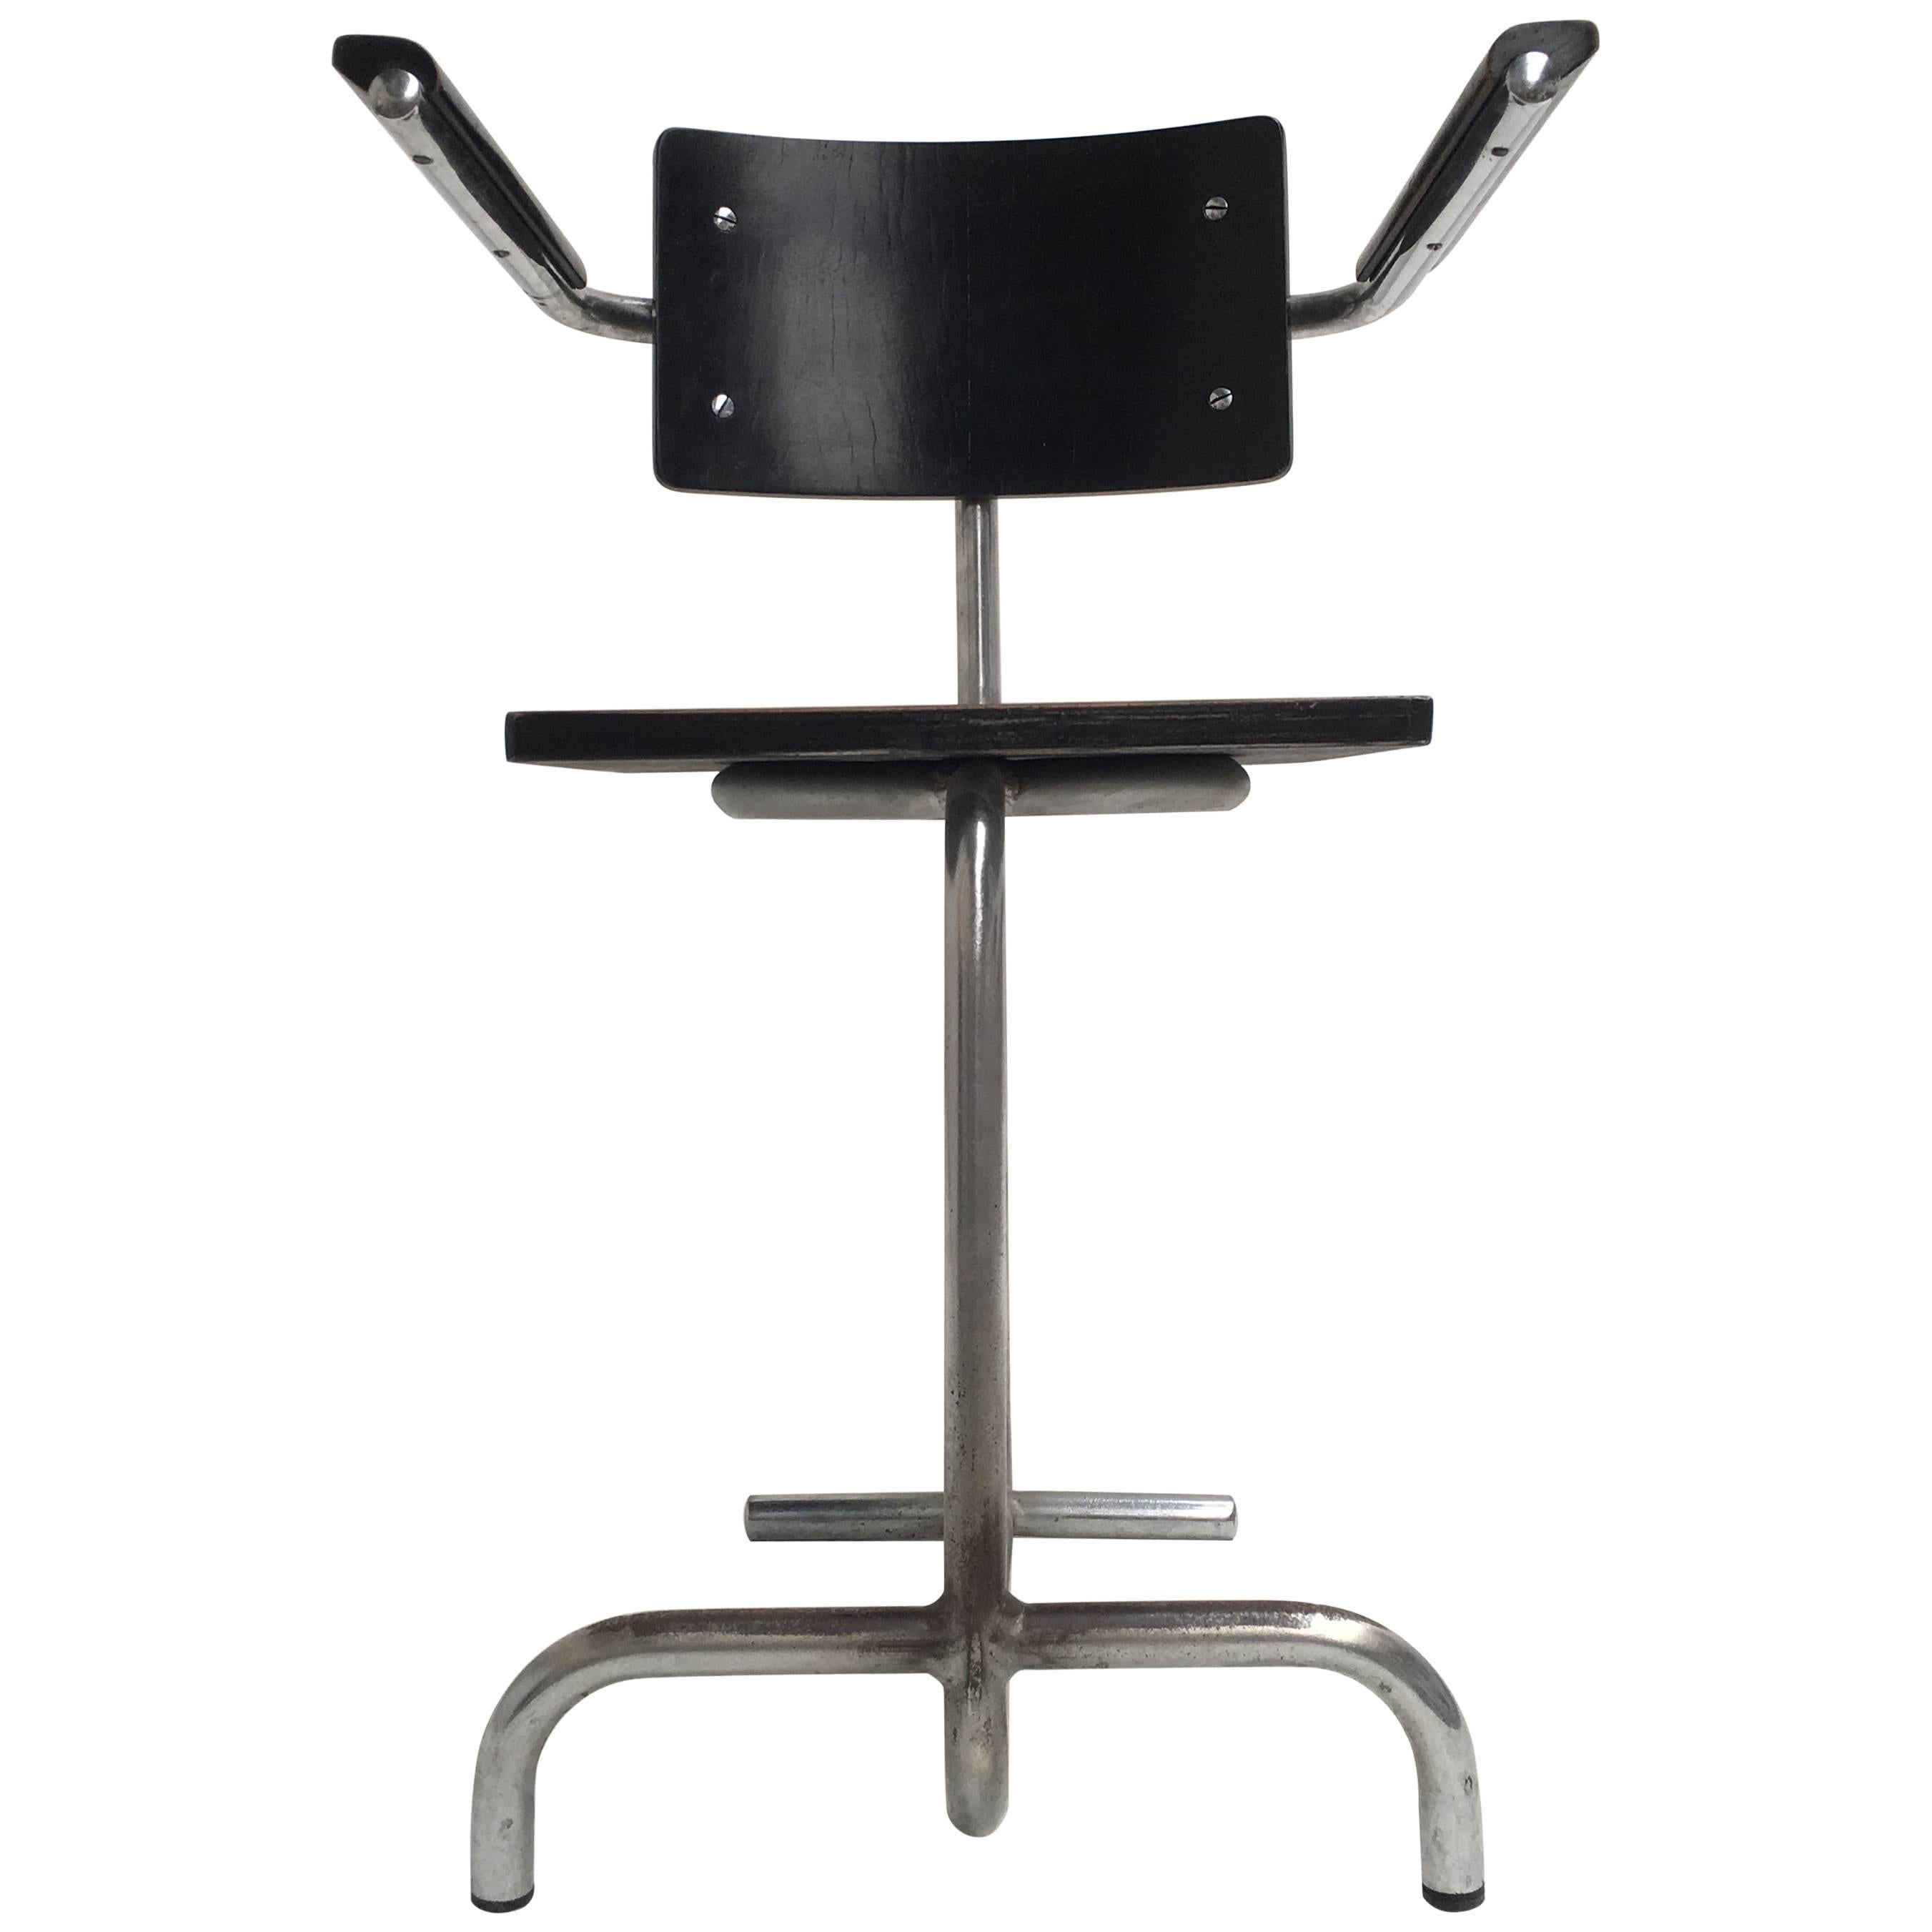 1930s Tubular Chair by Belgian Avant Garde Designer/Architect Gaston Eysselinck